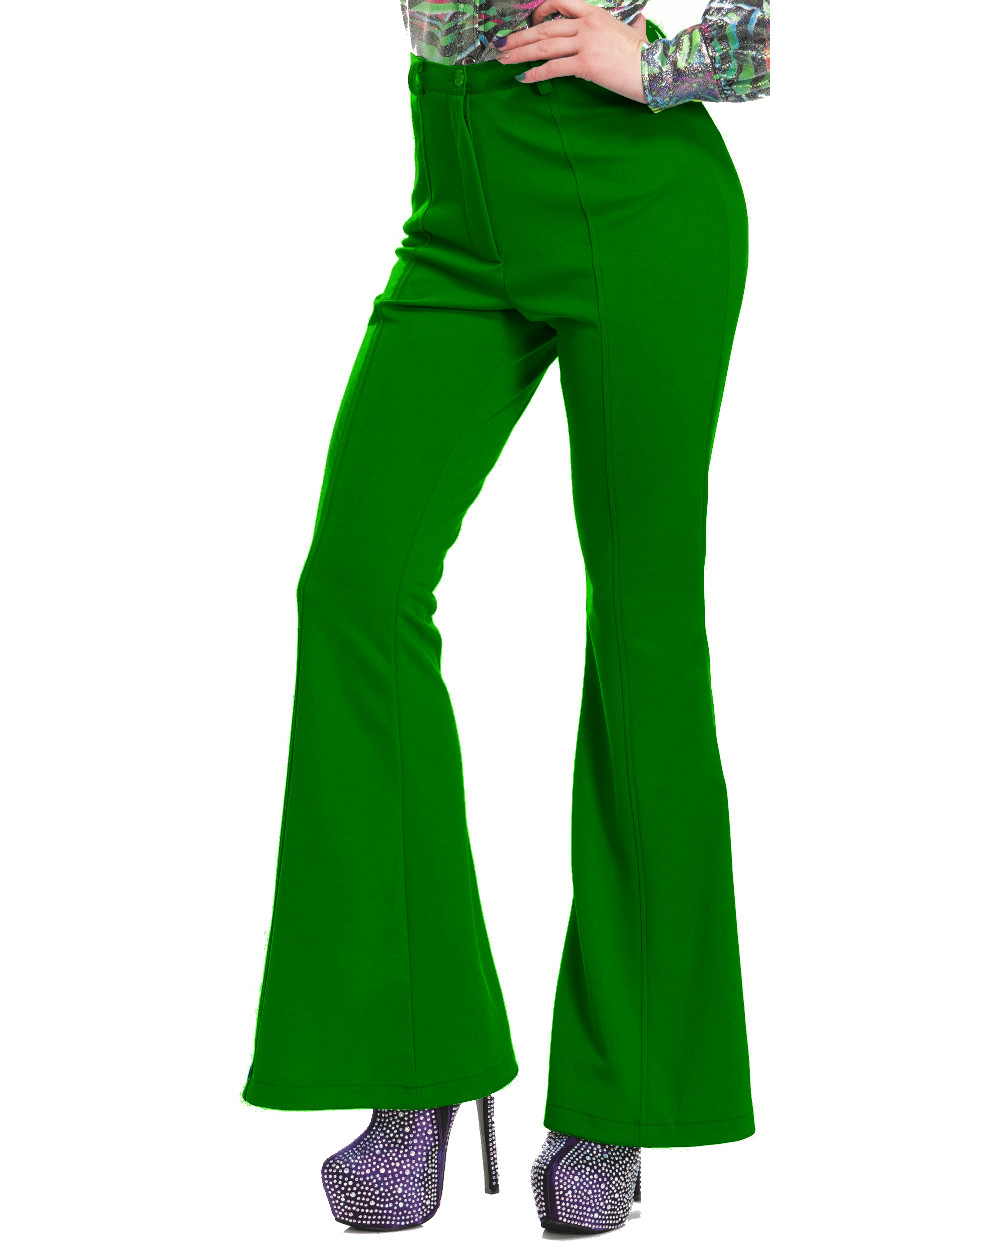 Womens 70s High Waisted Green Disco Pants